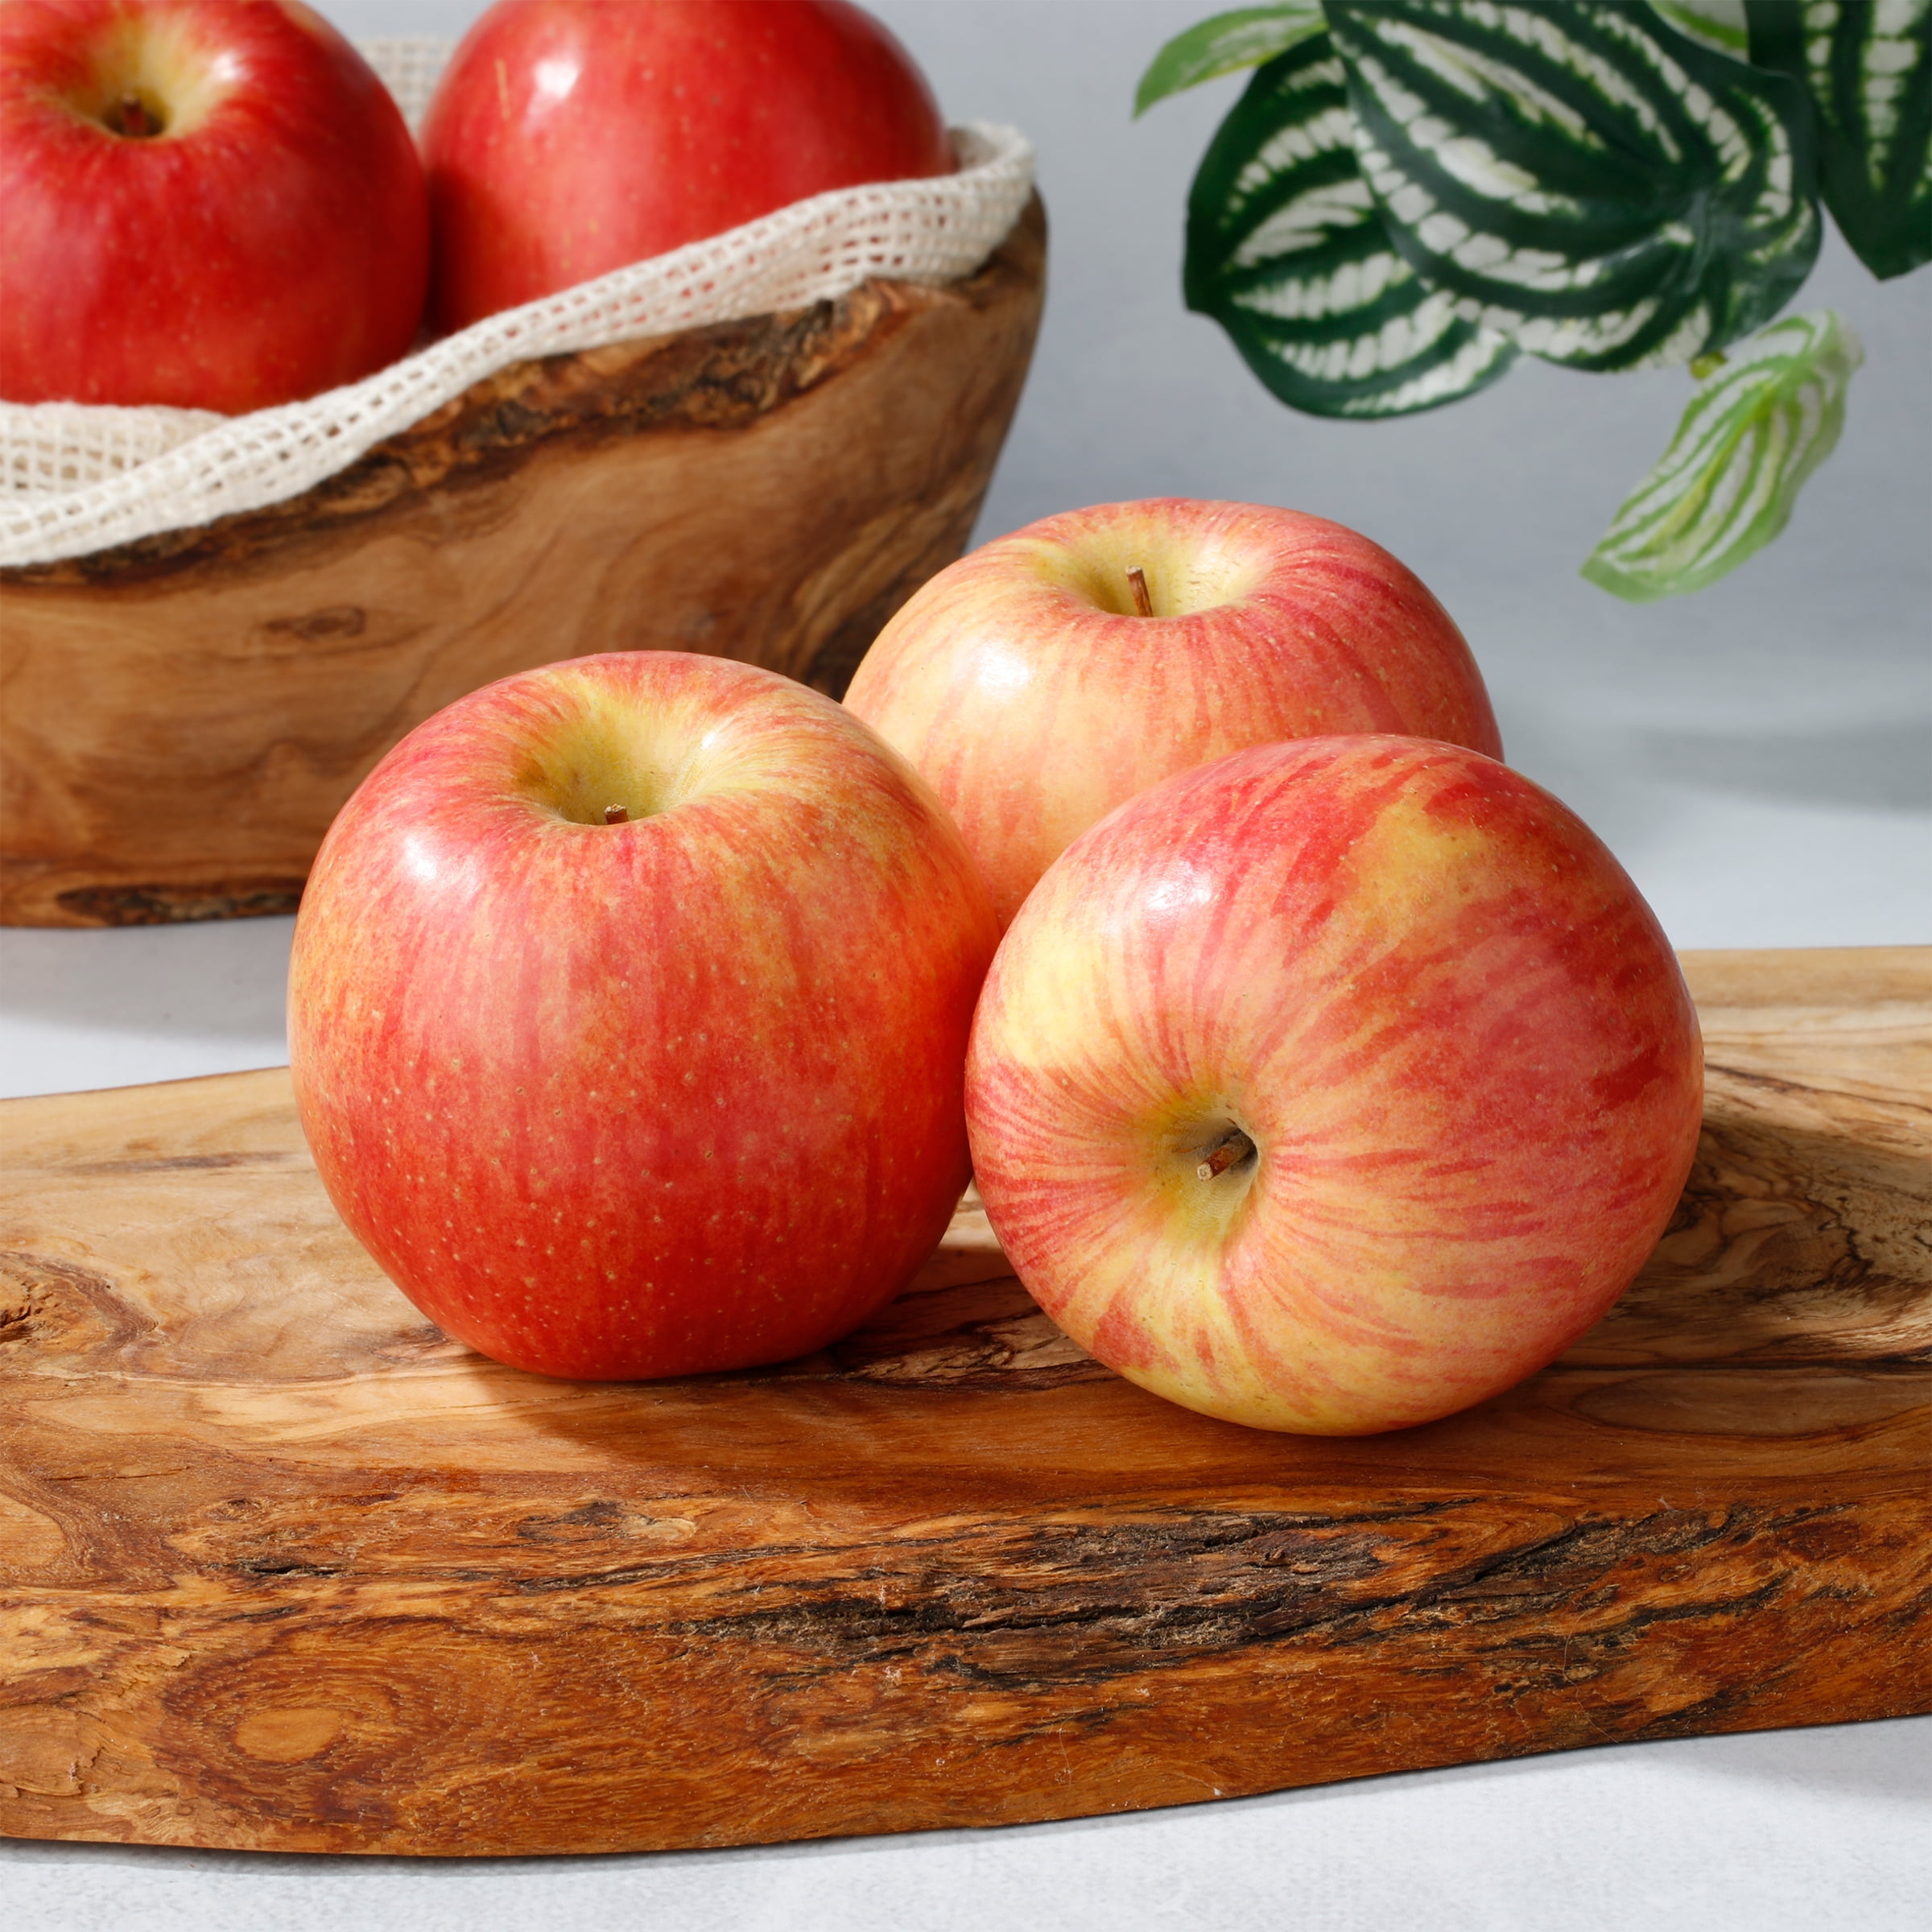 PRODUCE Organic Fuji Apples Bag, 48 OZ : Grocery & Gourmet Food 